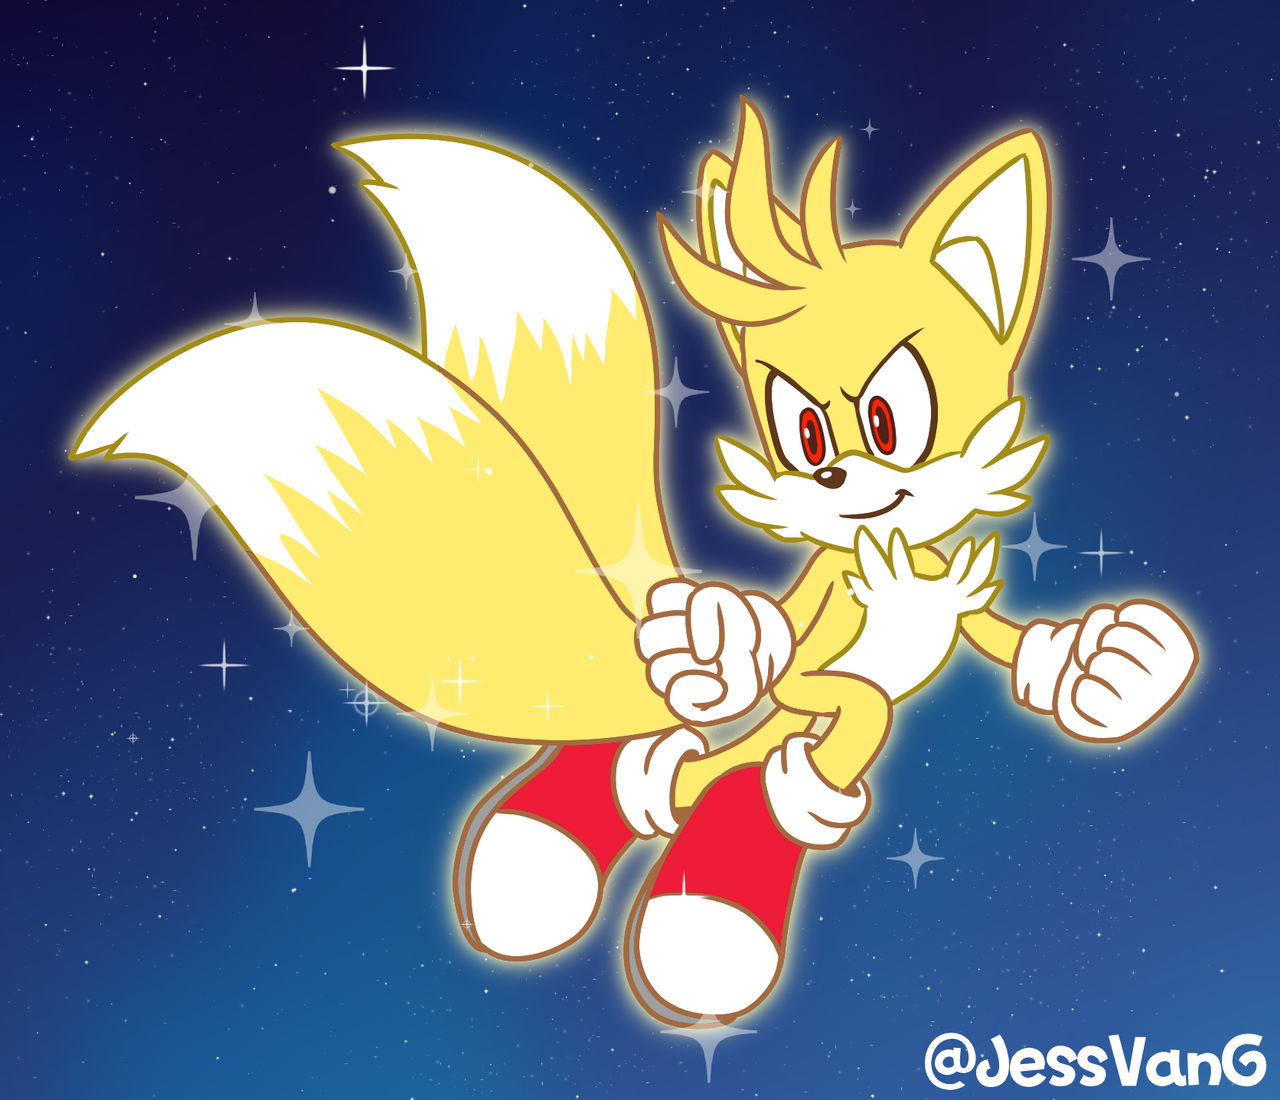 Super Tails  Hedgehog art, Sonic fan art, Sonic art